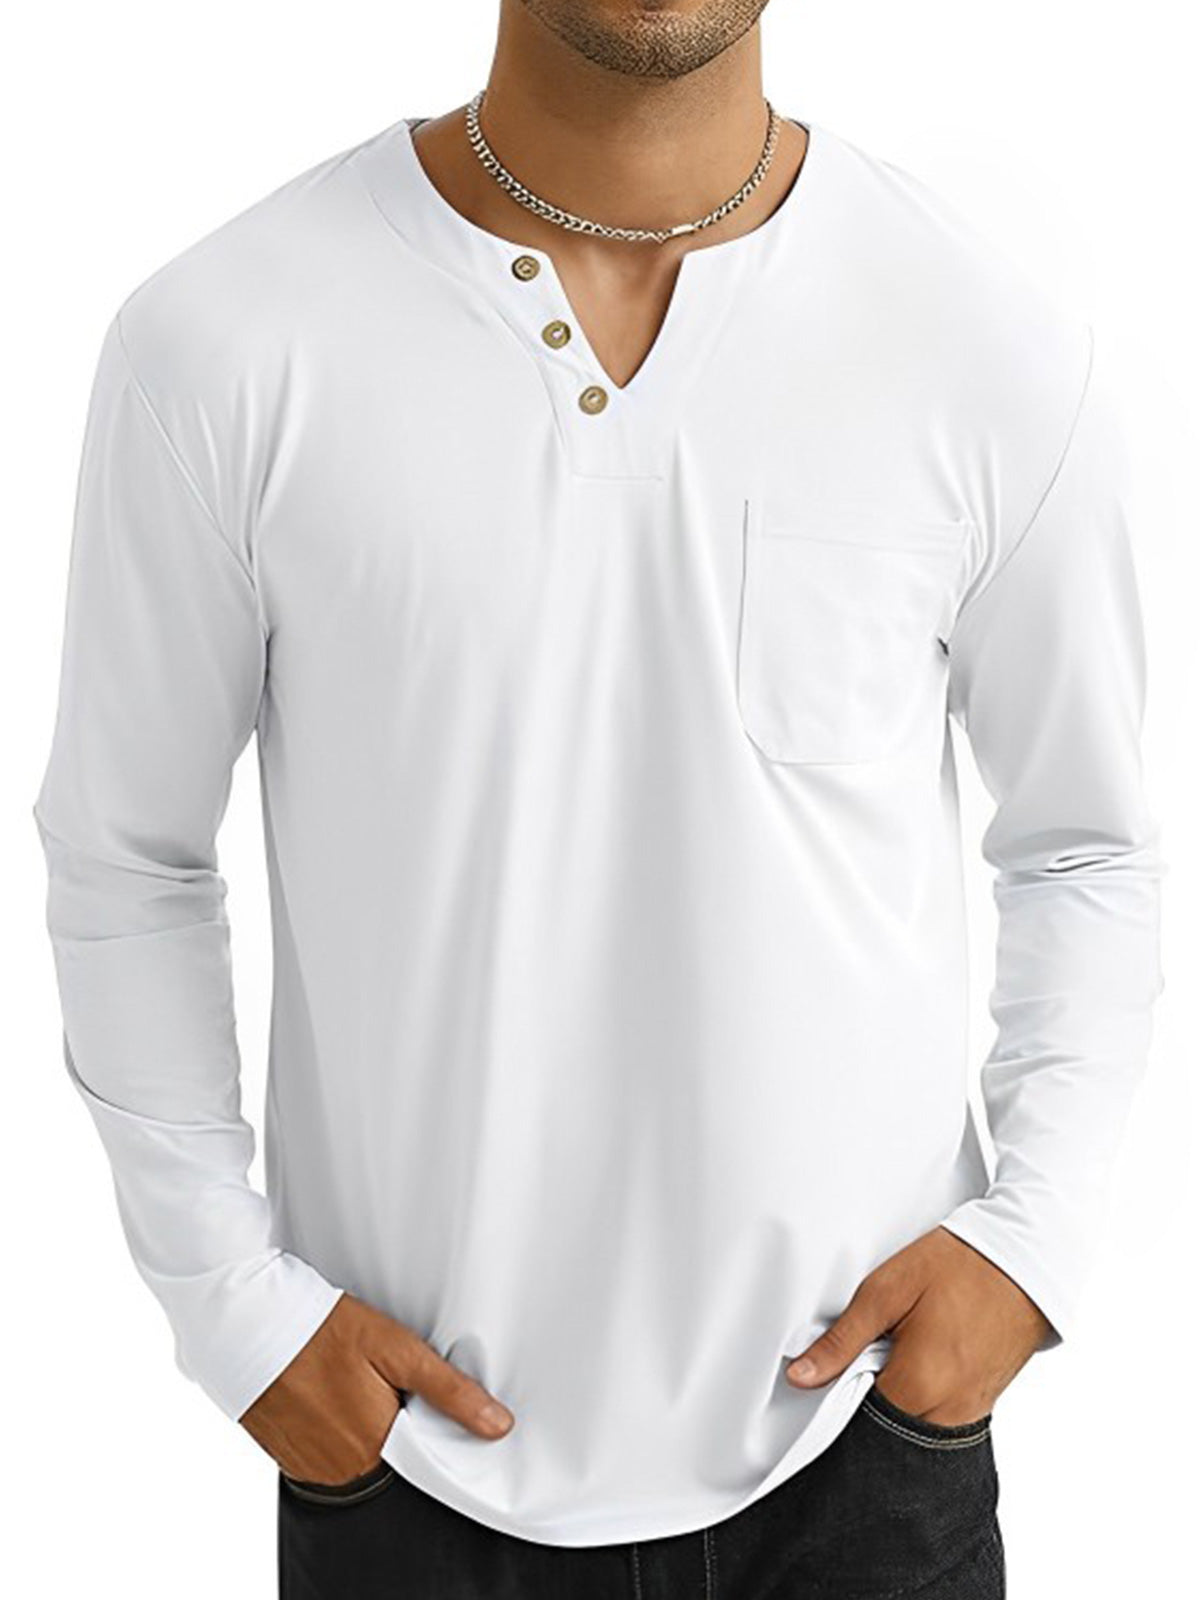 Men's v-neck button pocket long sleeve t-shirt top